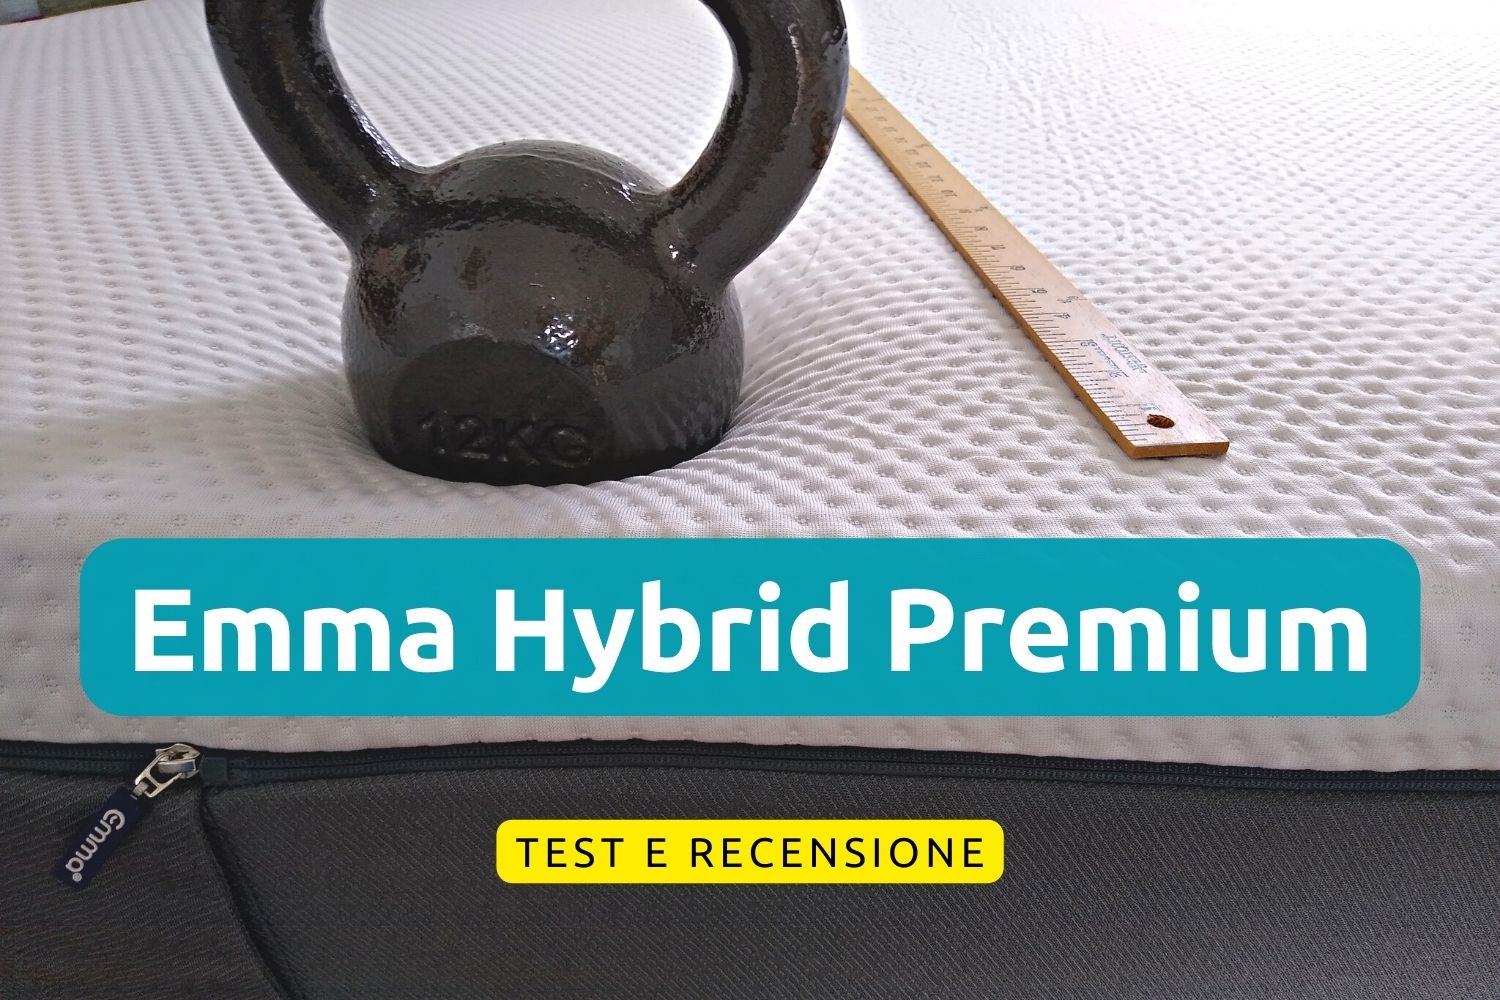 Emma Hybrid Premium, test e recensione